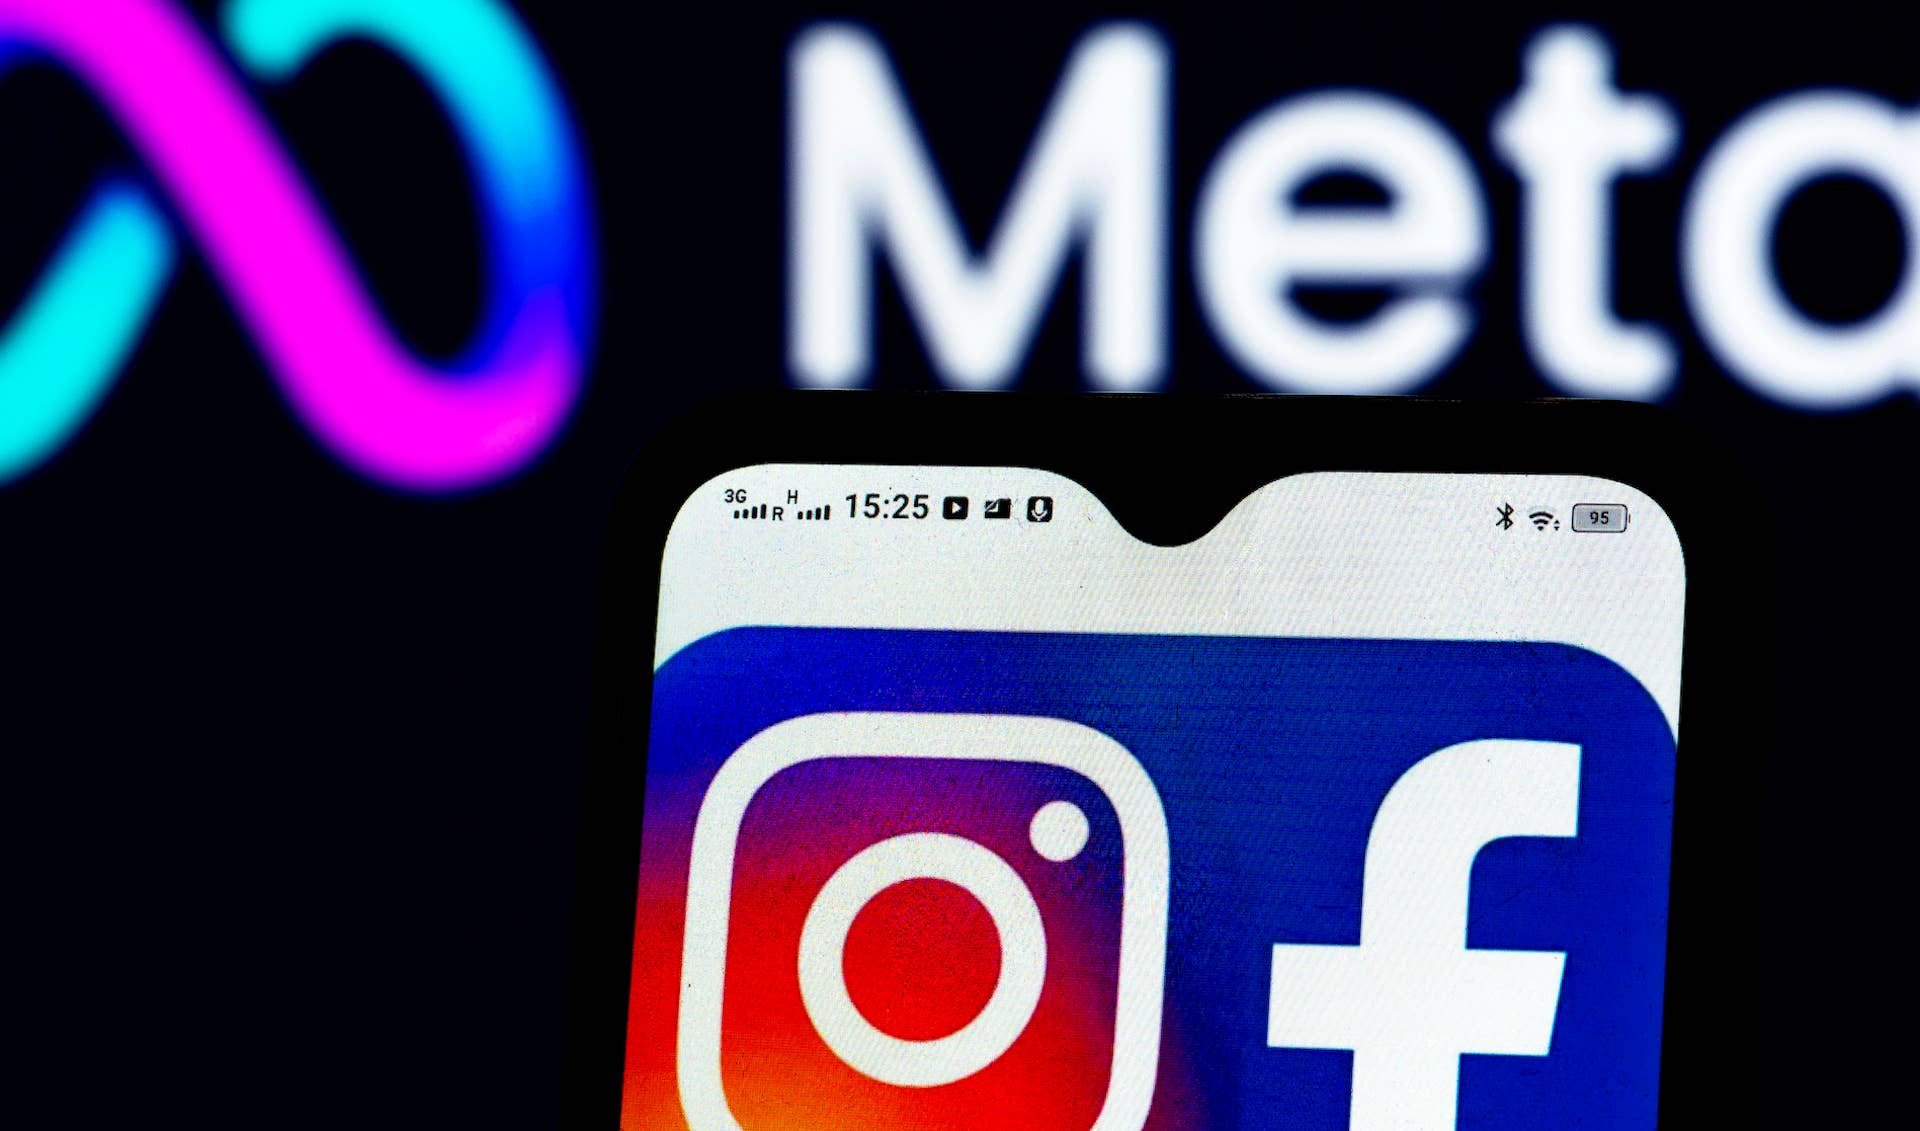 Facebook and Instagram's parent company Meta